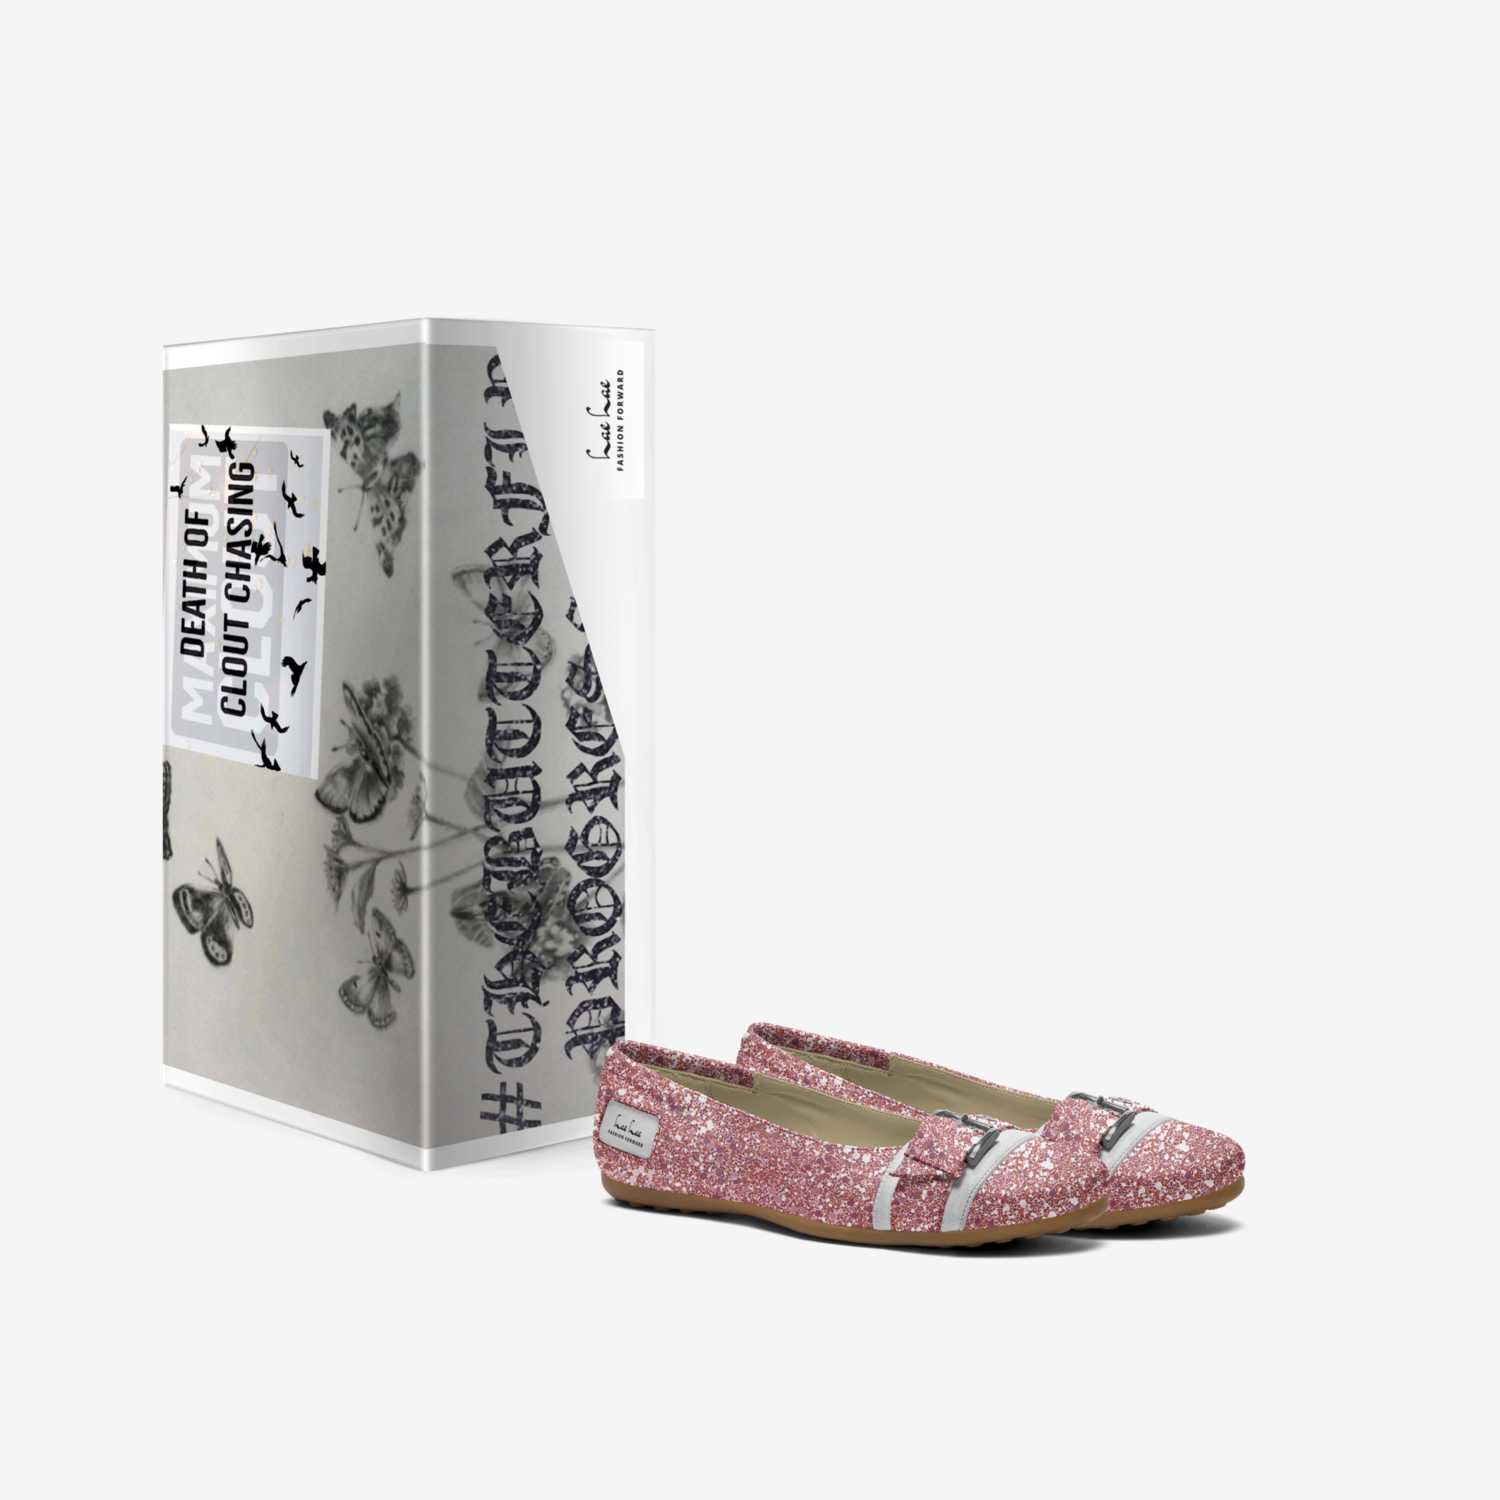 Lae Lae custom made in Italy shoes by Takiya Robinson | Box view